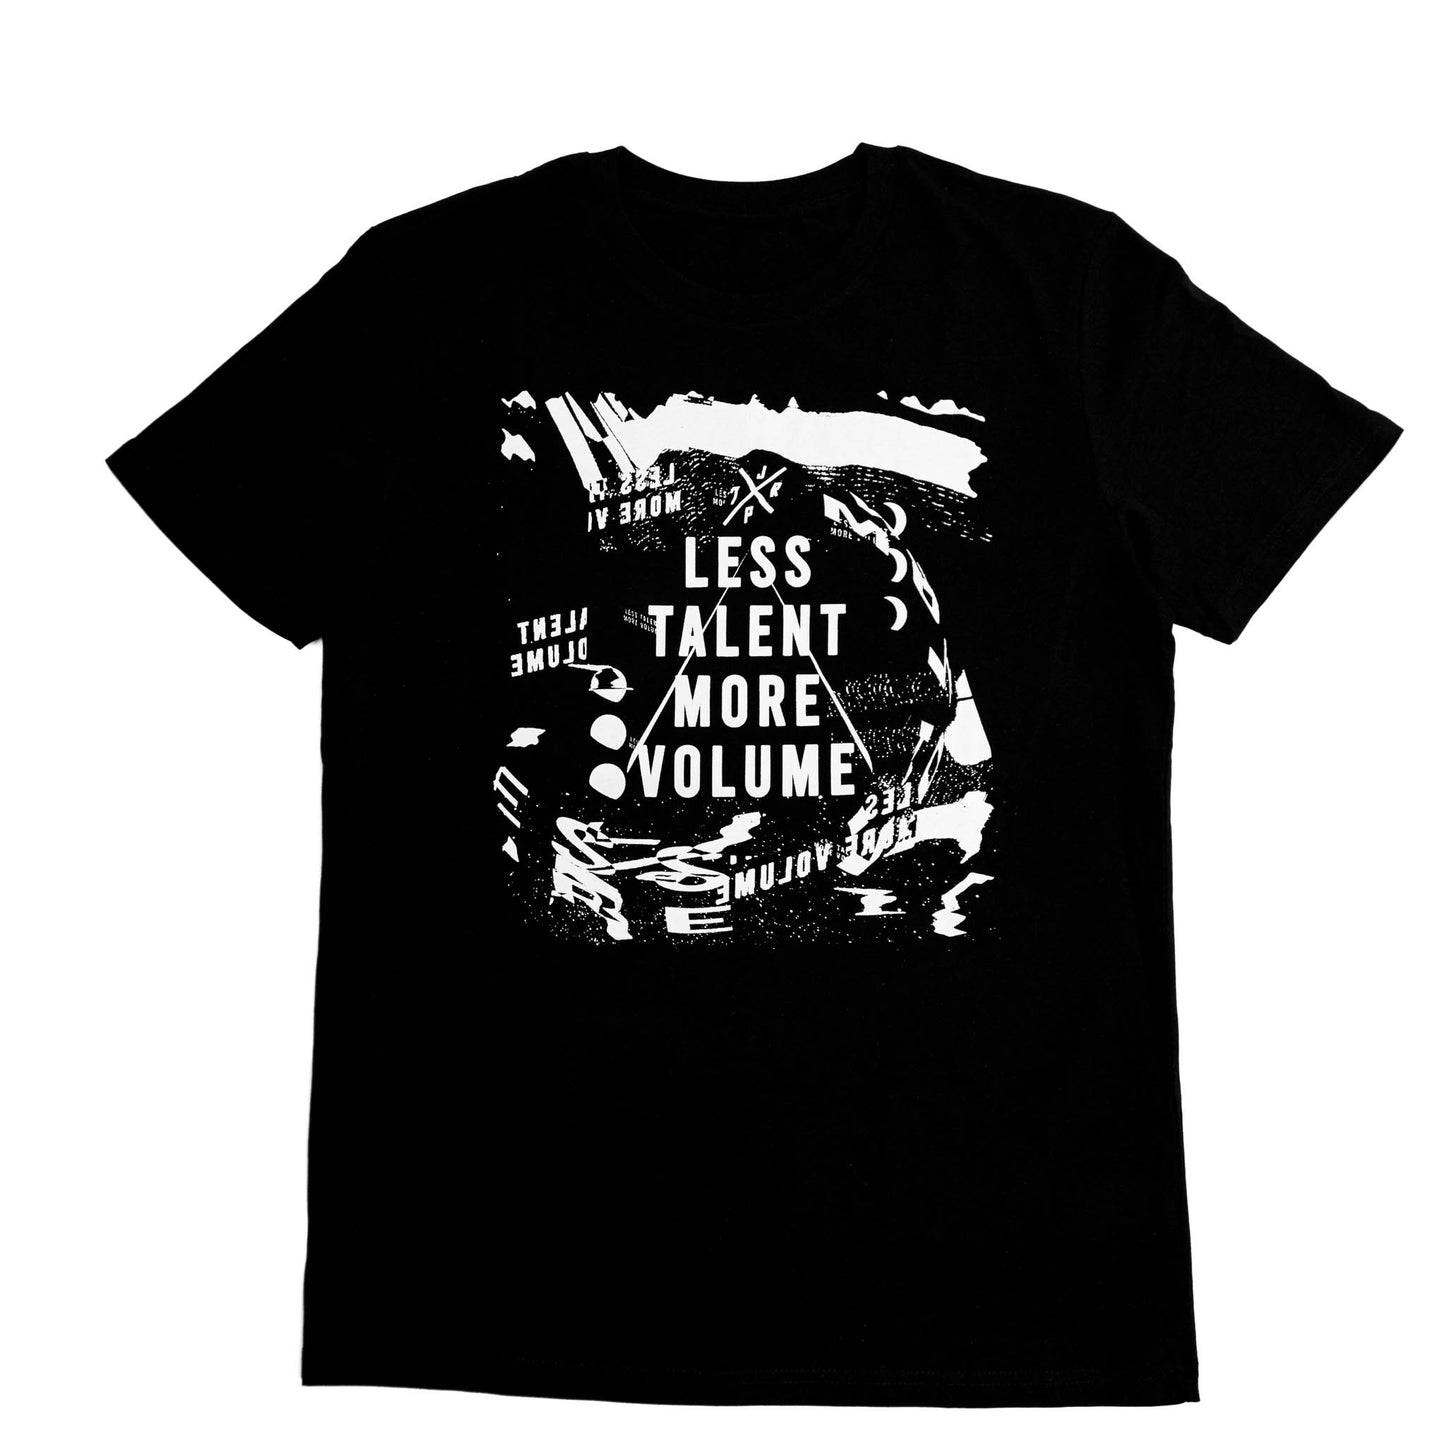 Less Talent More Volume - Shirt